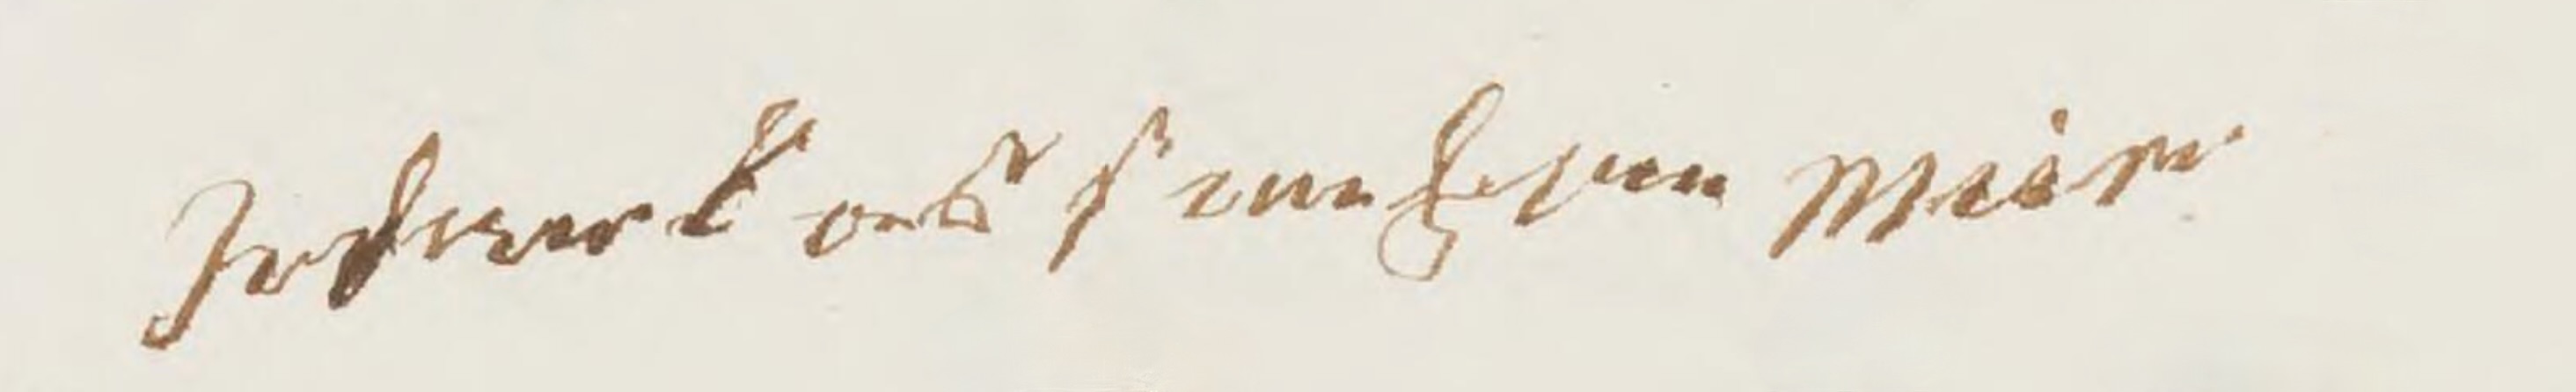 Johan Casper hendrik handtekening